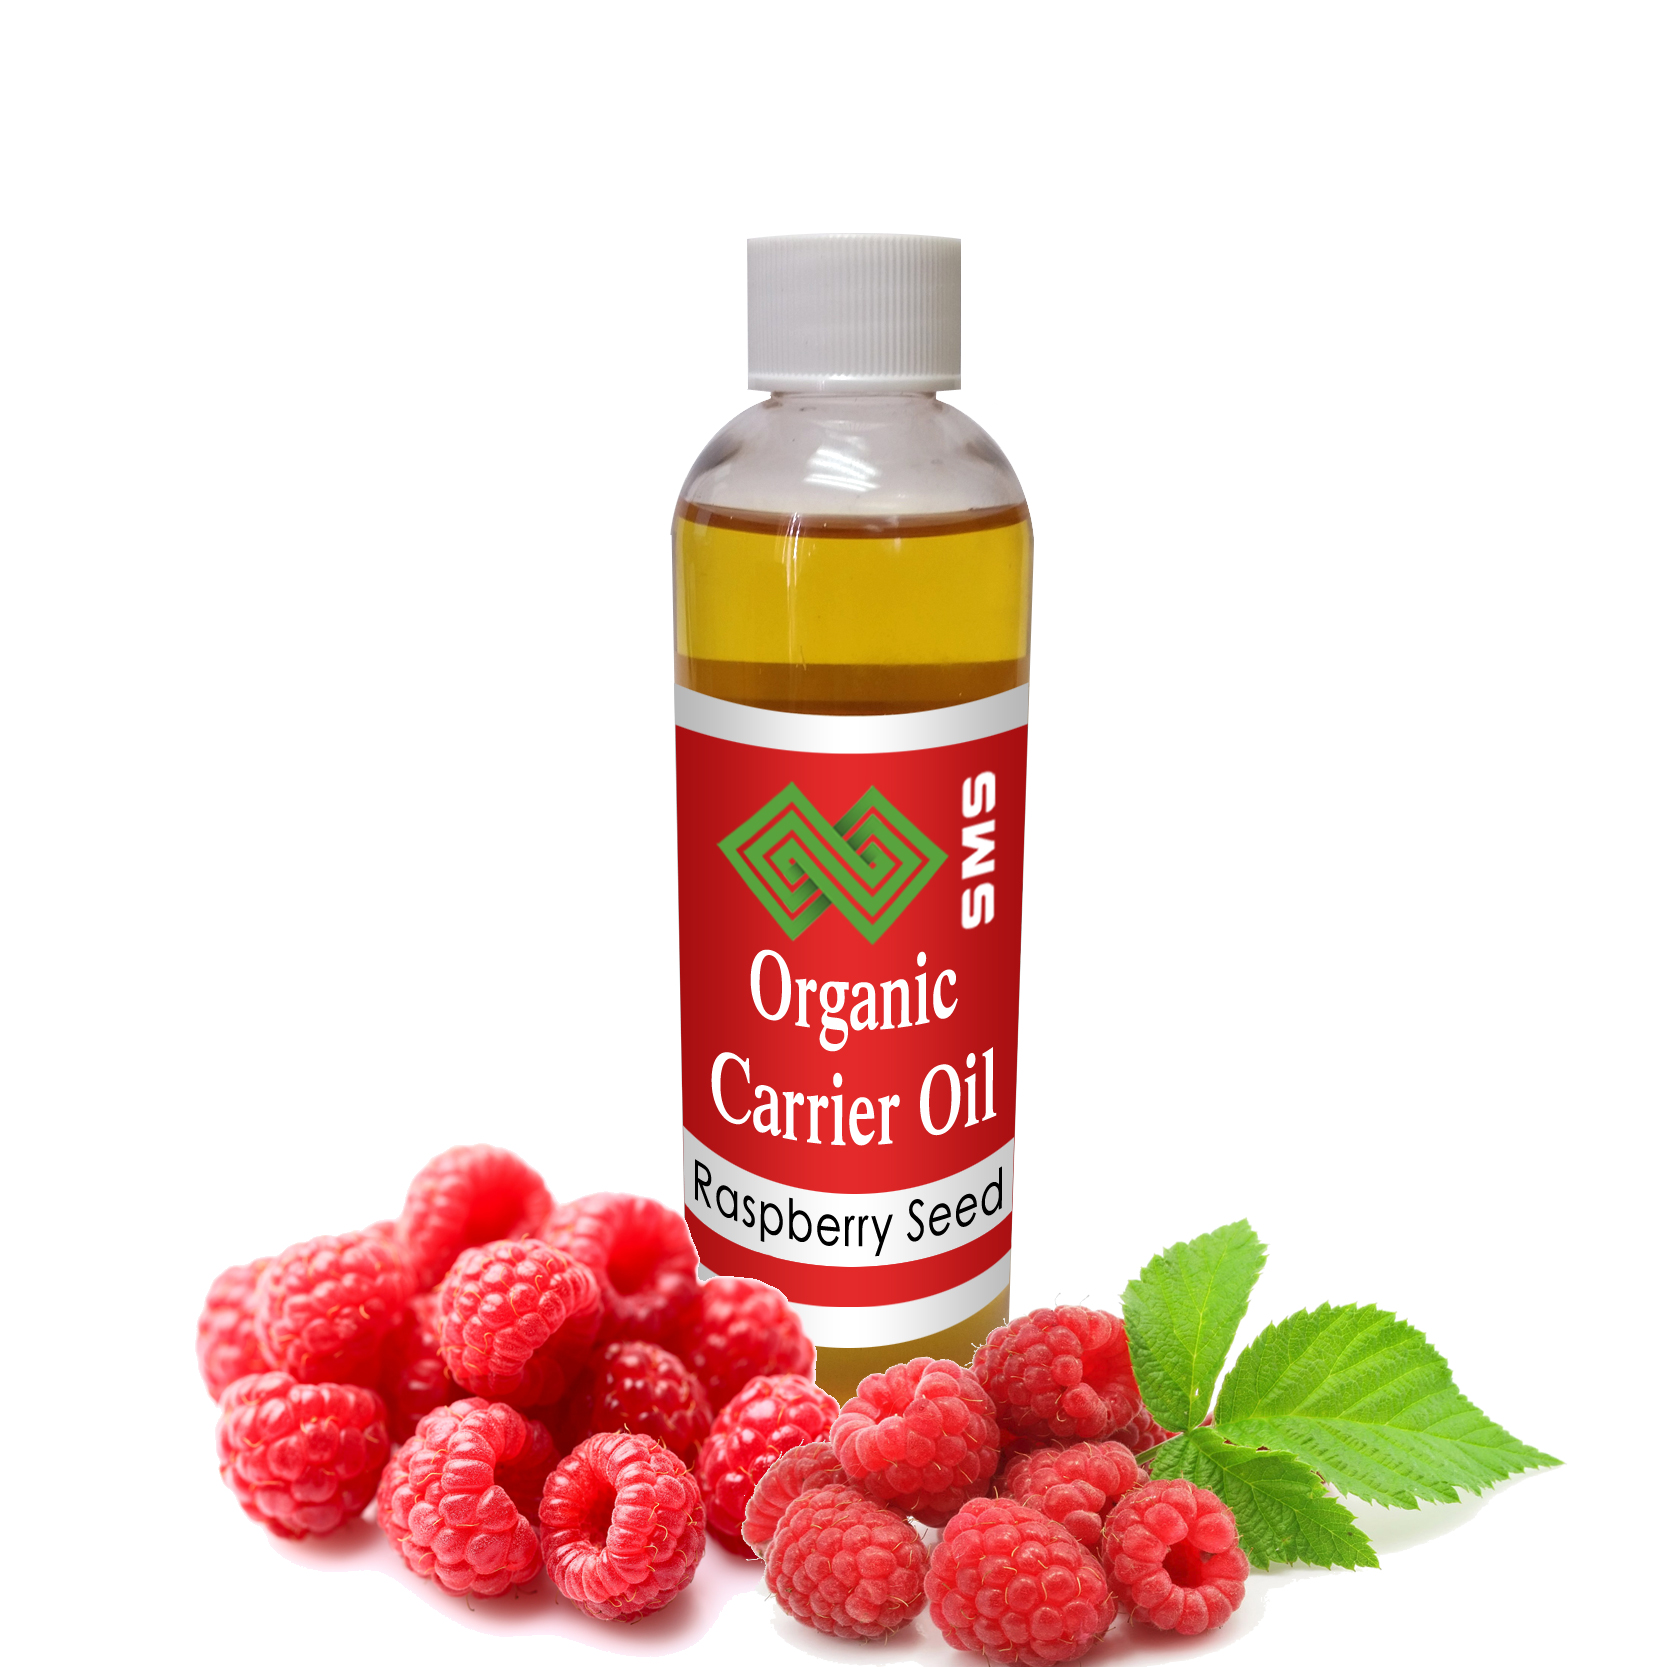 Raspberry Seed Virgin Carrier Oil Organic